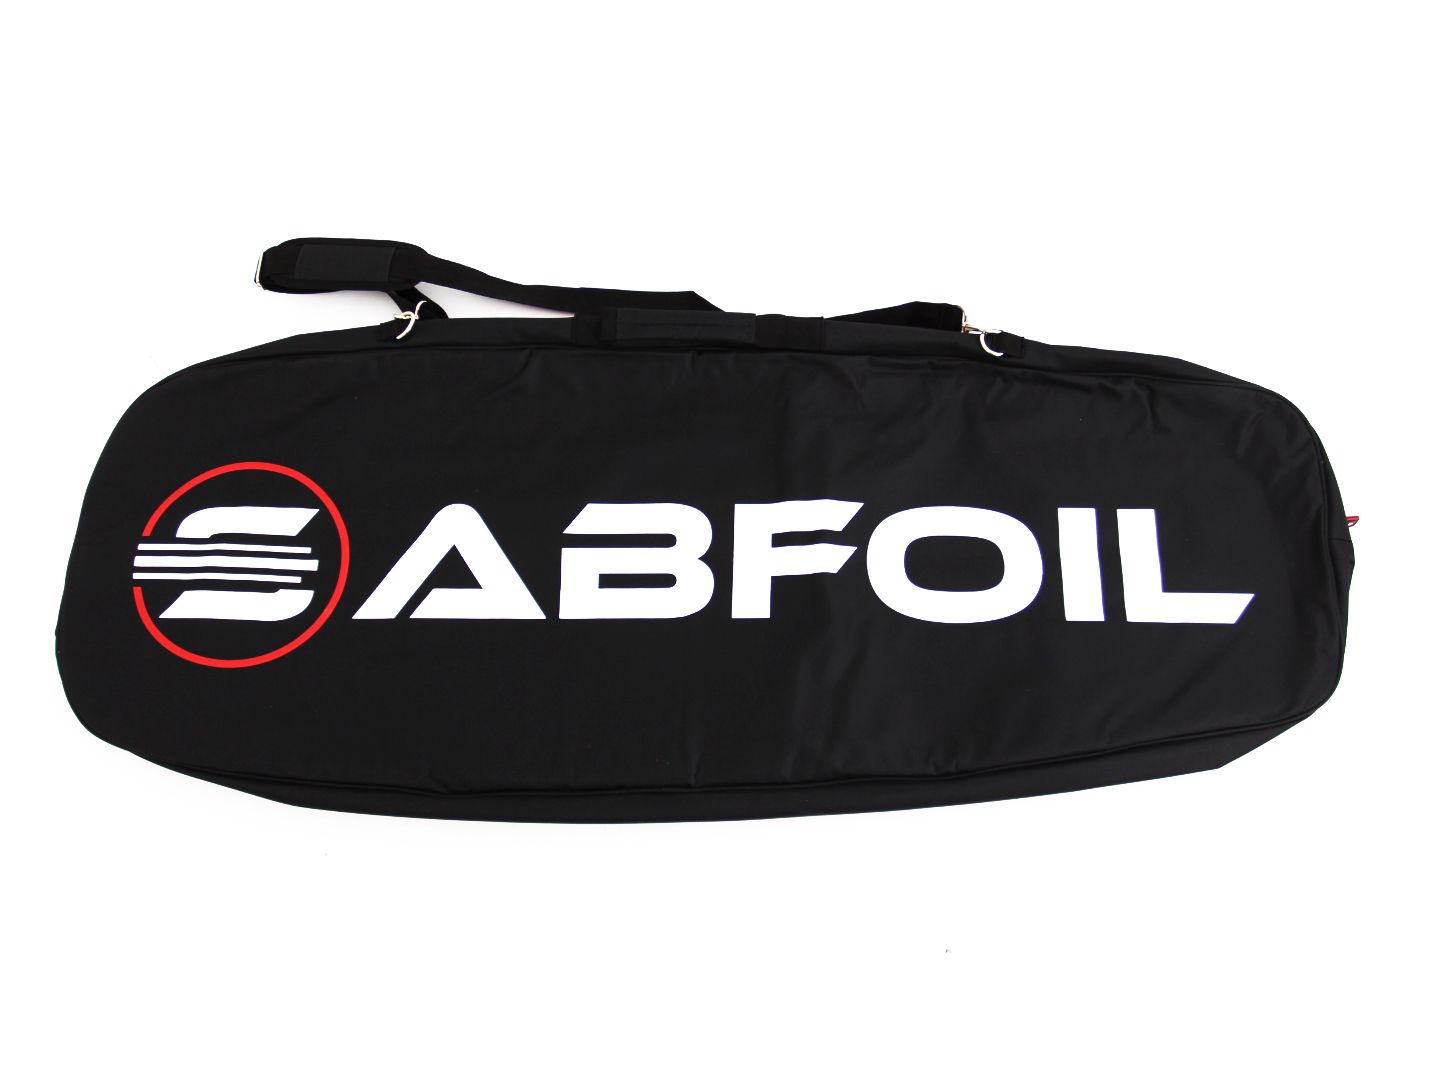 Sabfoil Board Bag